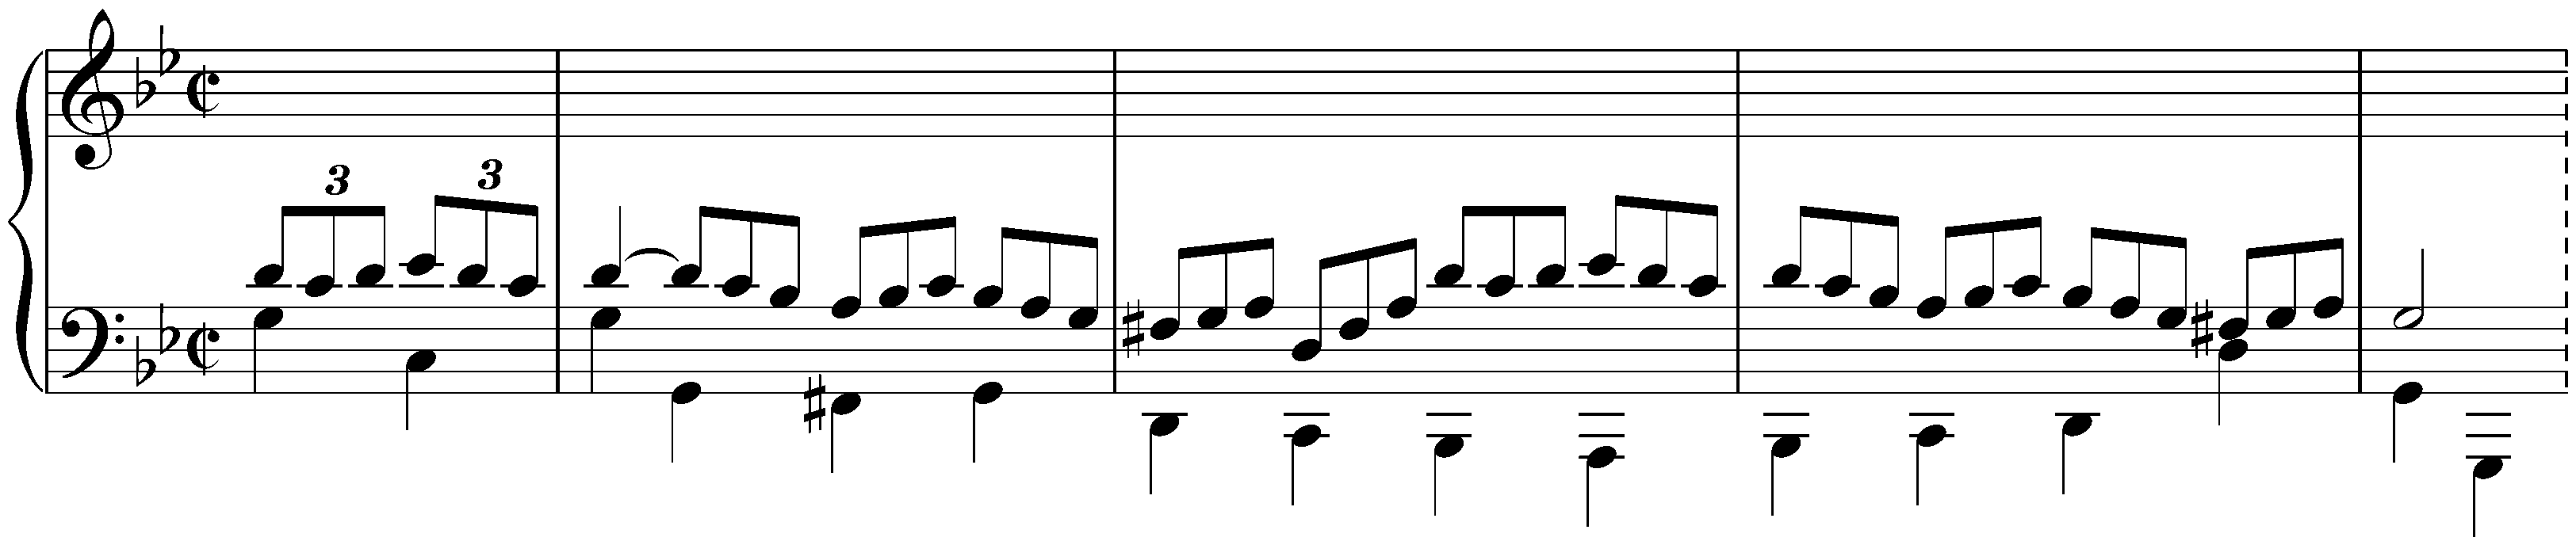 Suite in G minor, BWV 995; 5. Gavotte I – Gavotte II en Rondeau – Gavotte I